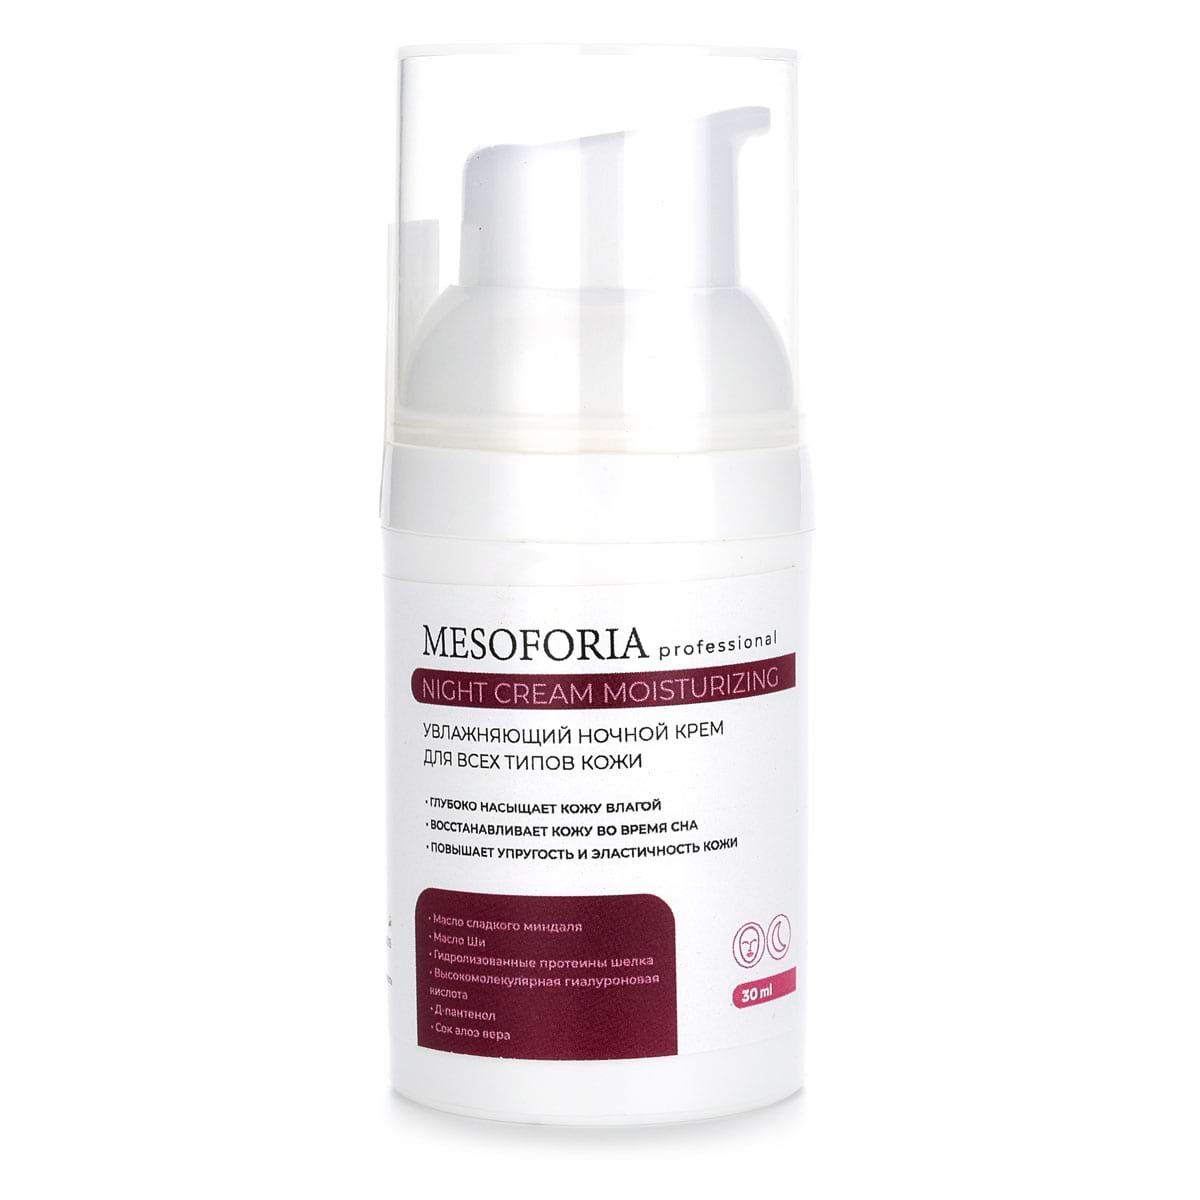 Night Cream Moisturizing / Увлажняющий ночной крем для всех типов кожи, Mesoforia (Мезофория) – 30 мл